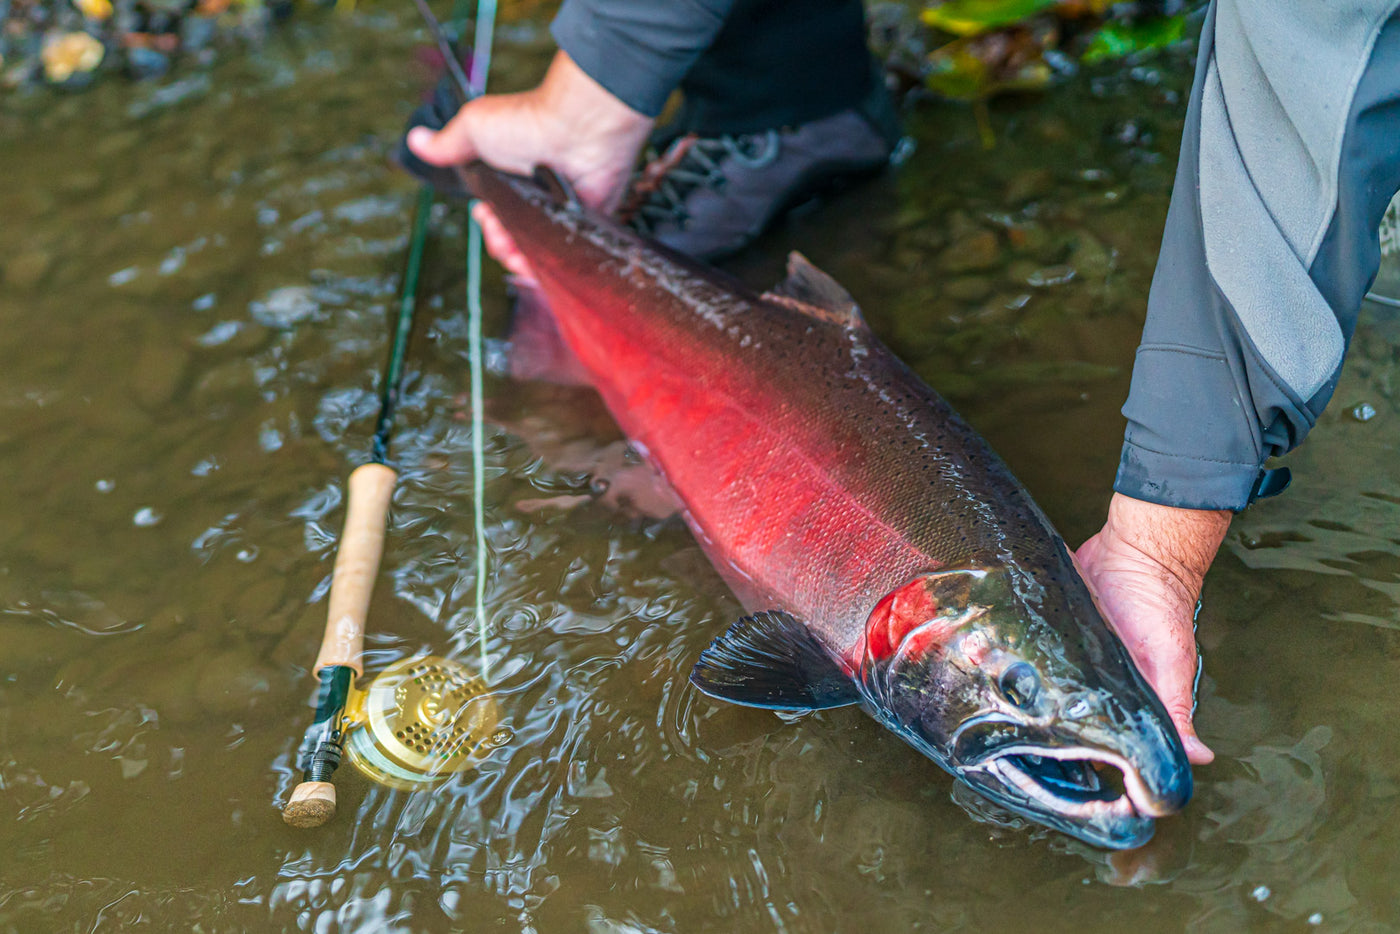 Satsop River Fly Fishing For Salmon, Steelhead